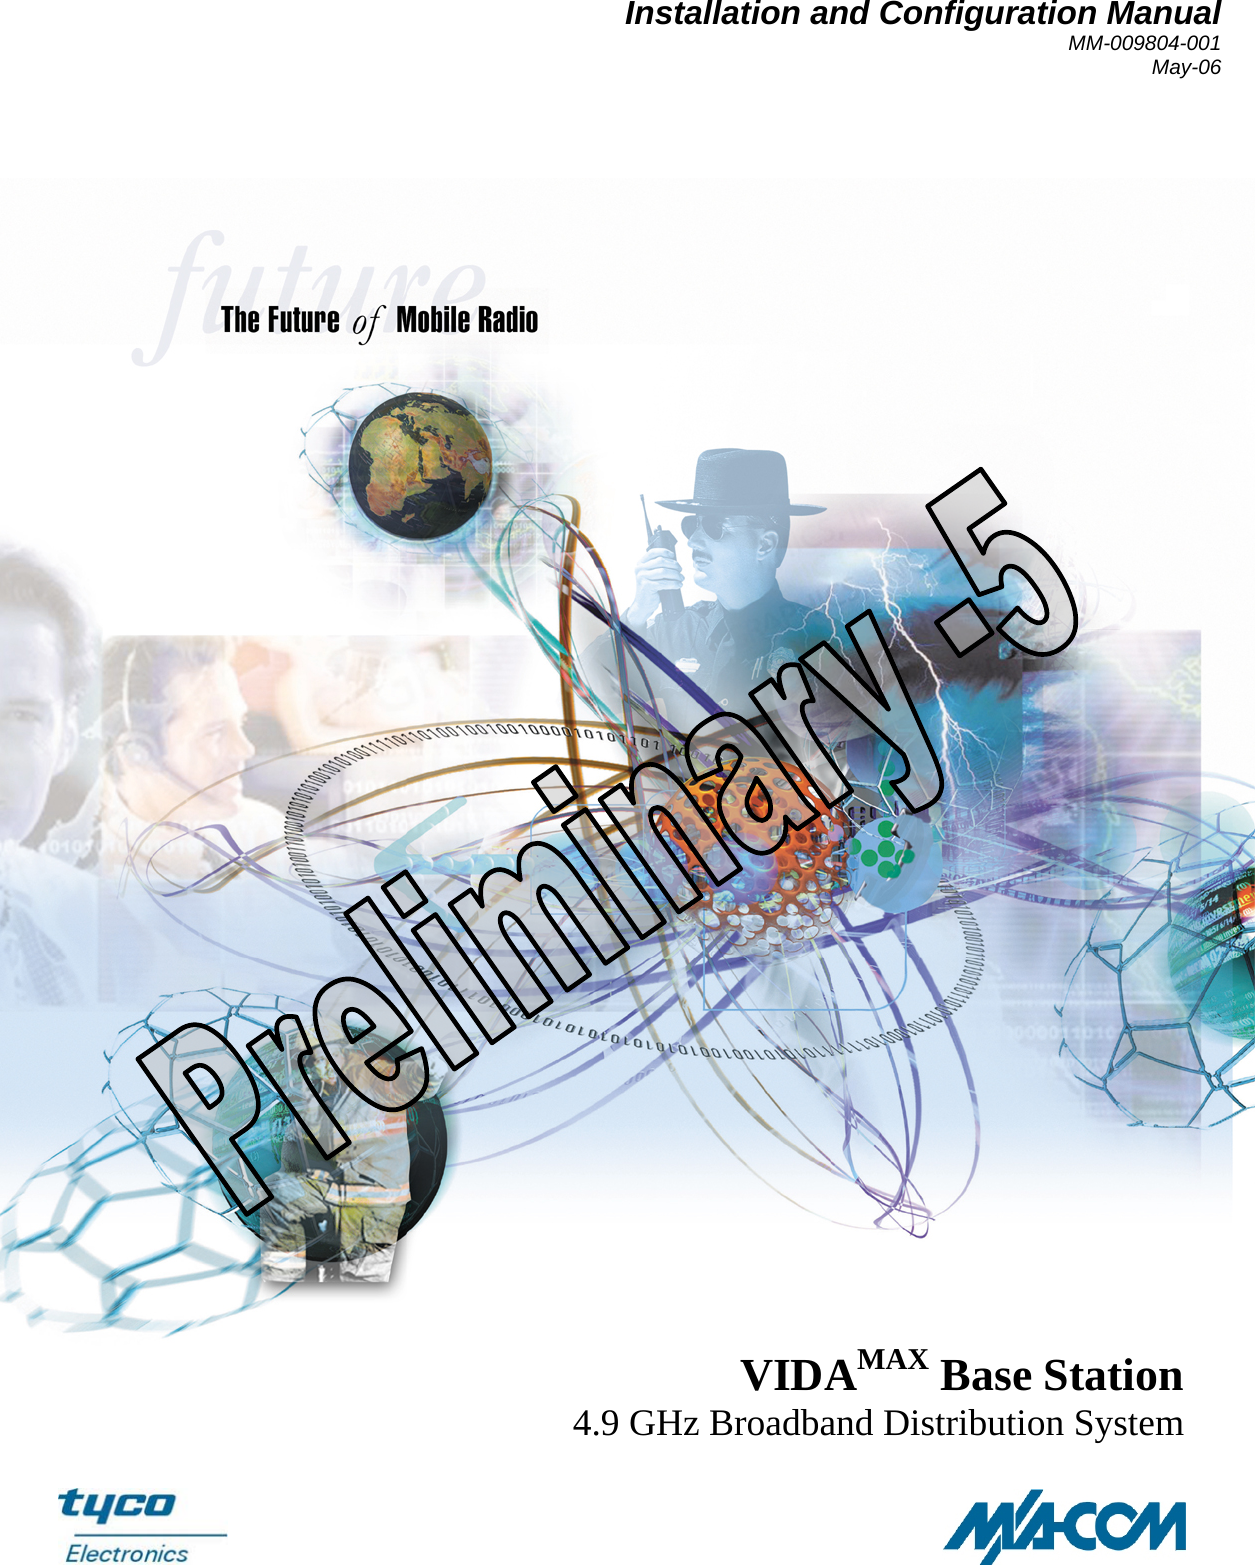 Installation and Configuration Manual MM-009804-001 May-06   VIDAMAX Base Station 4.9 GHz Broadband Distribution System 